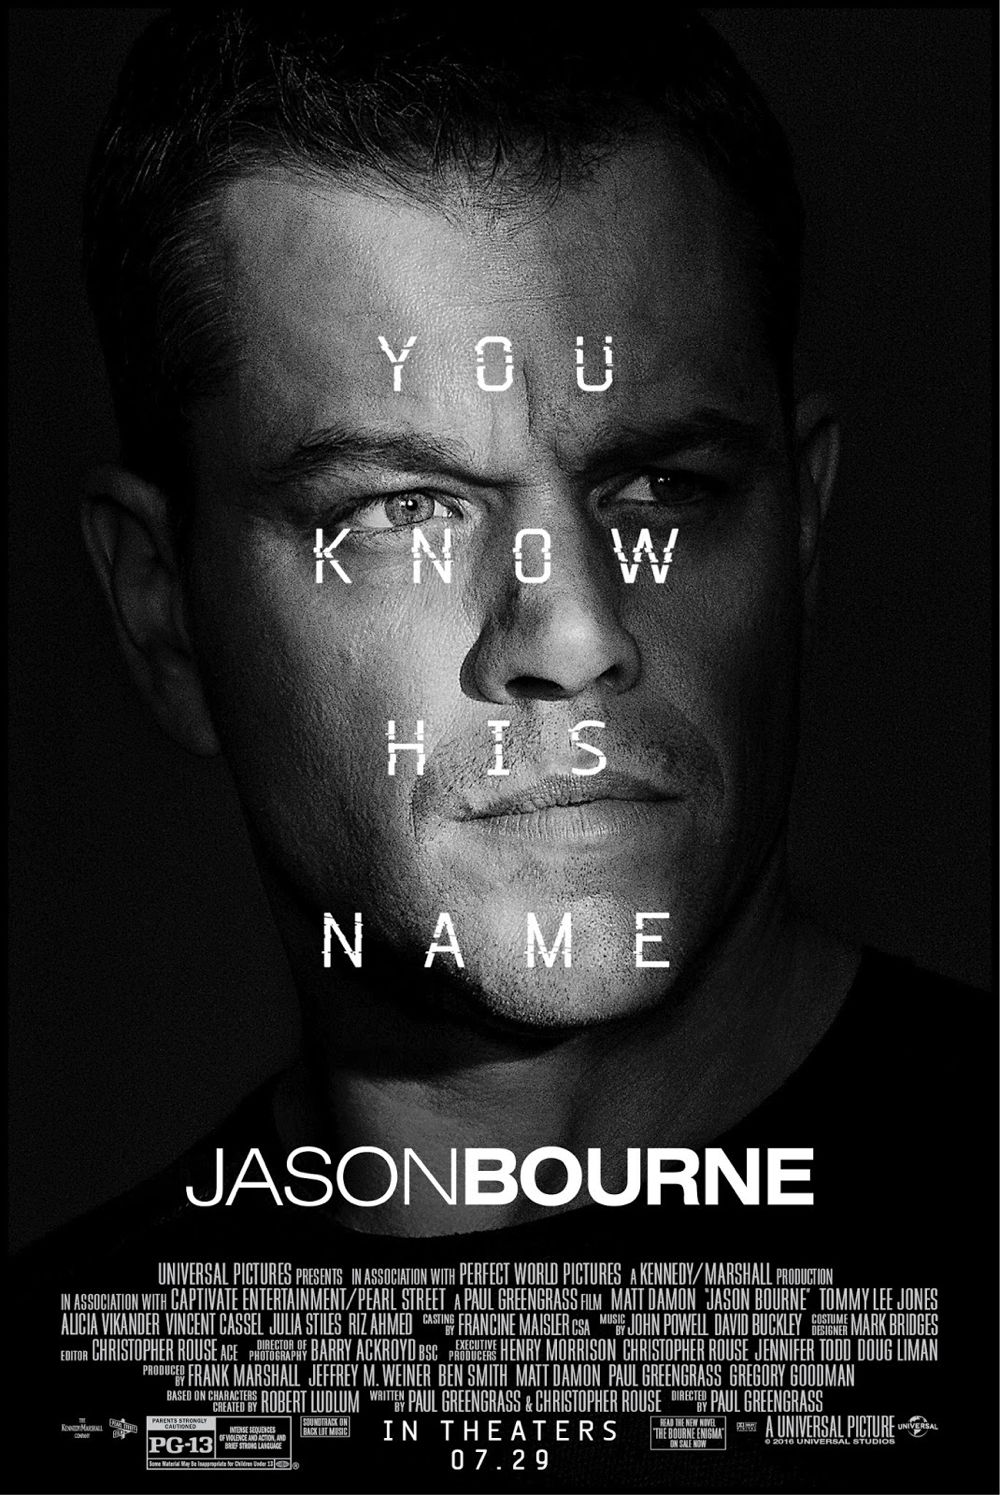 moviegoer.com: JASON BOURNE movie poster